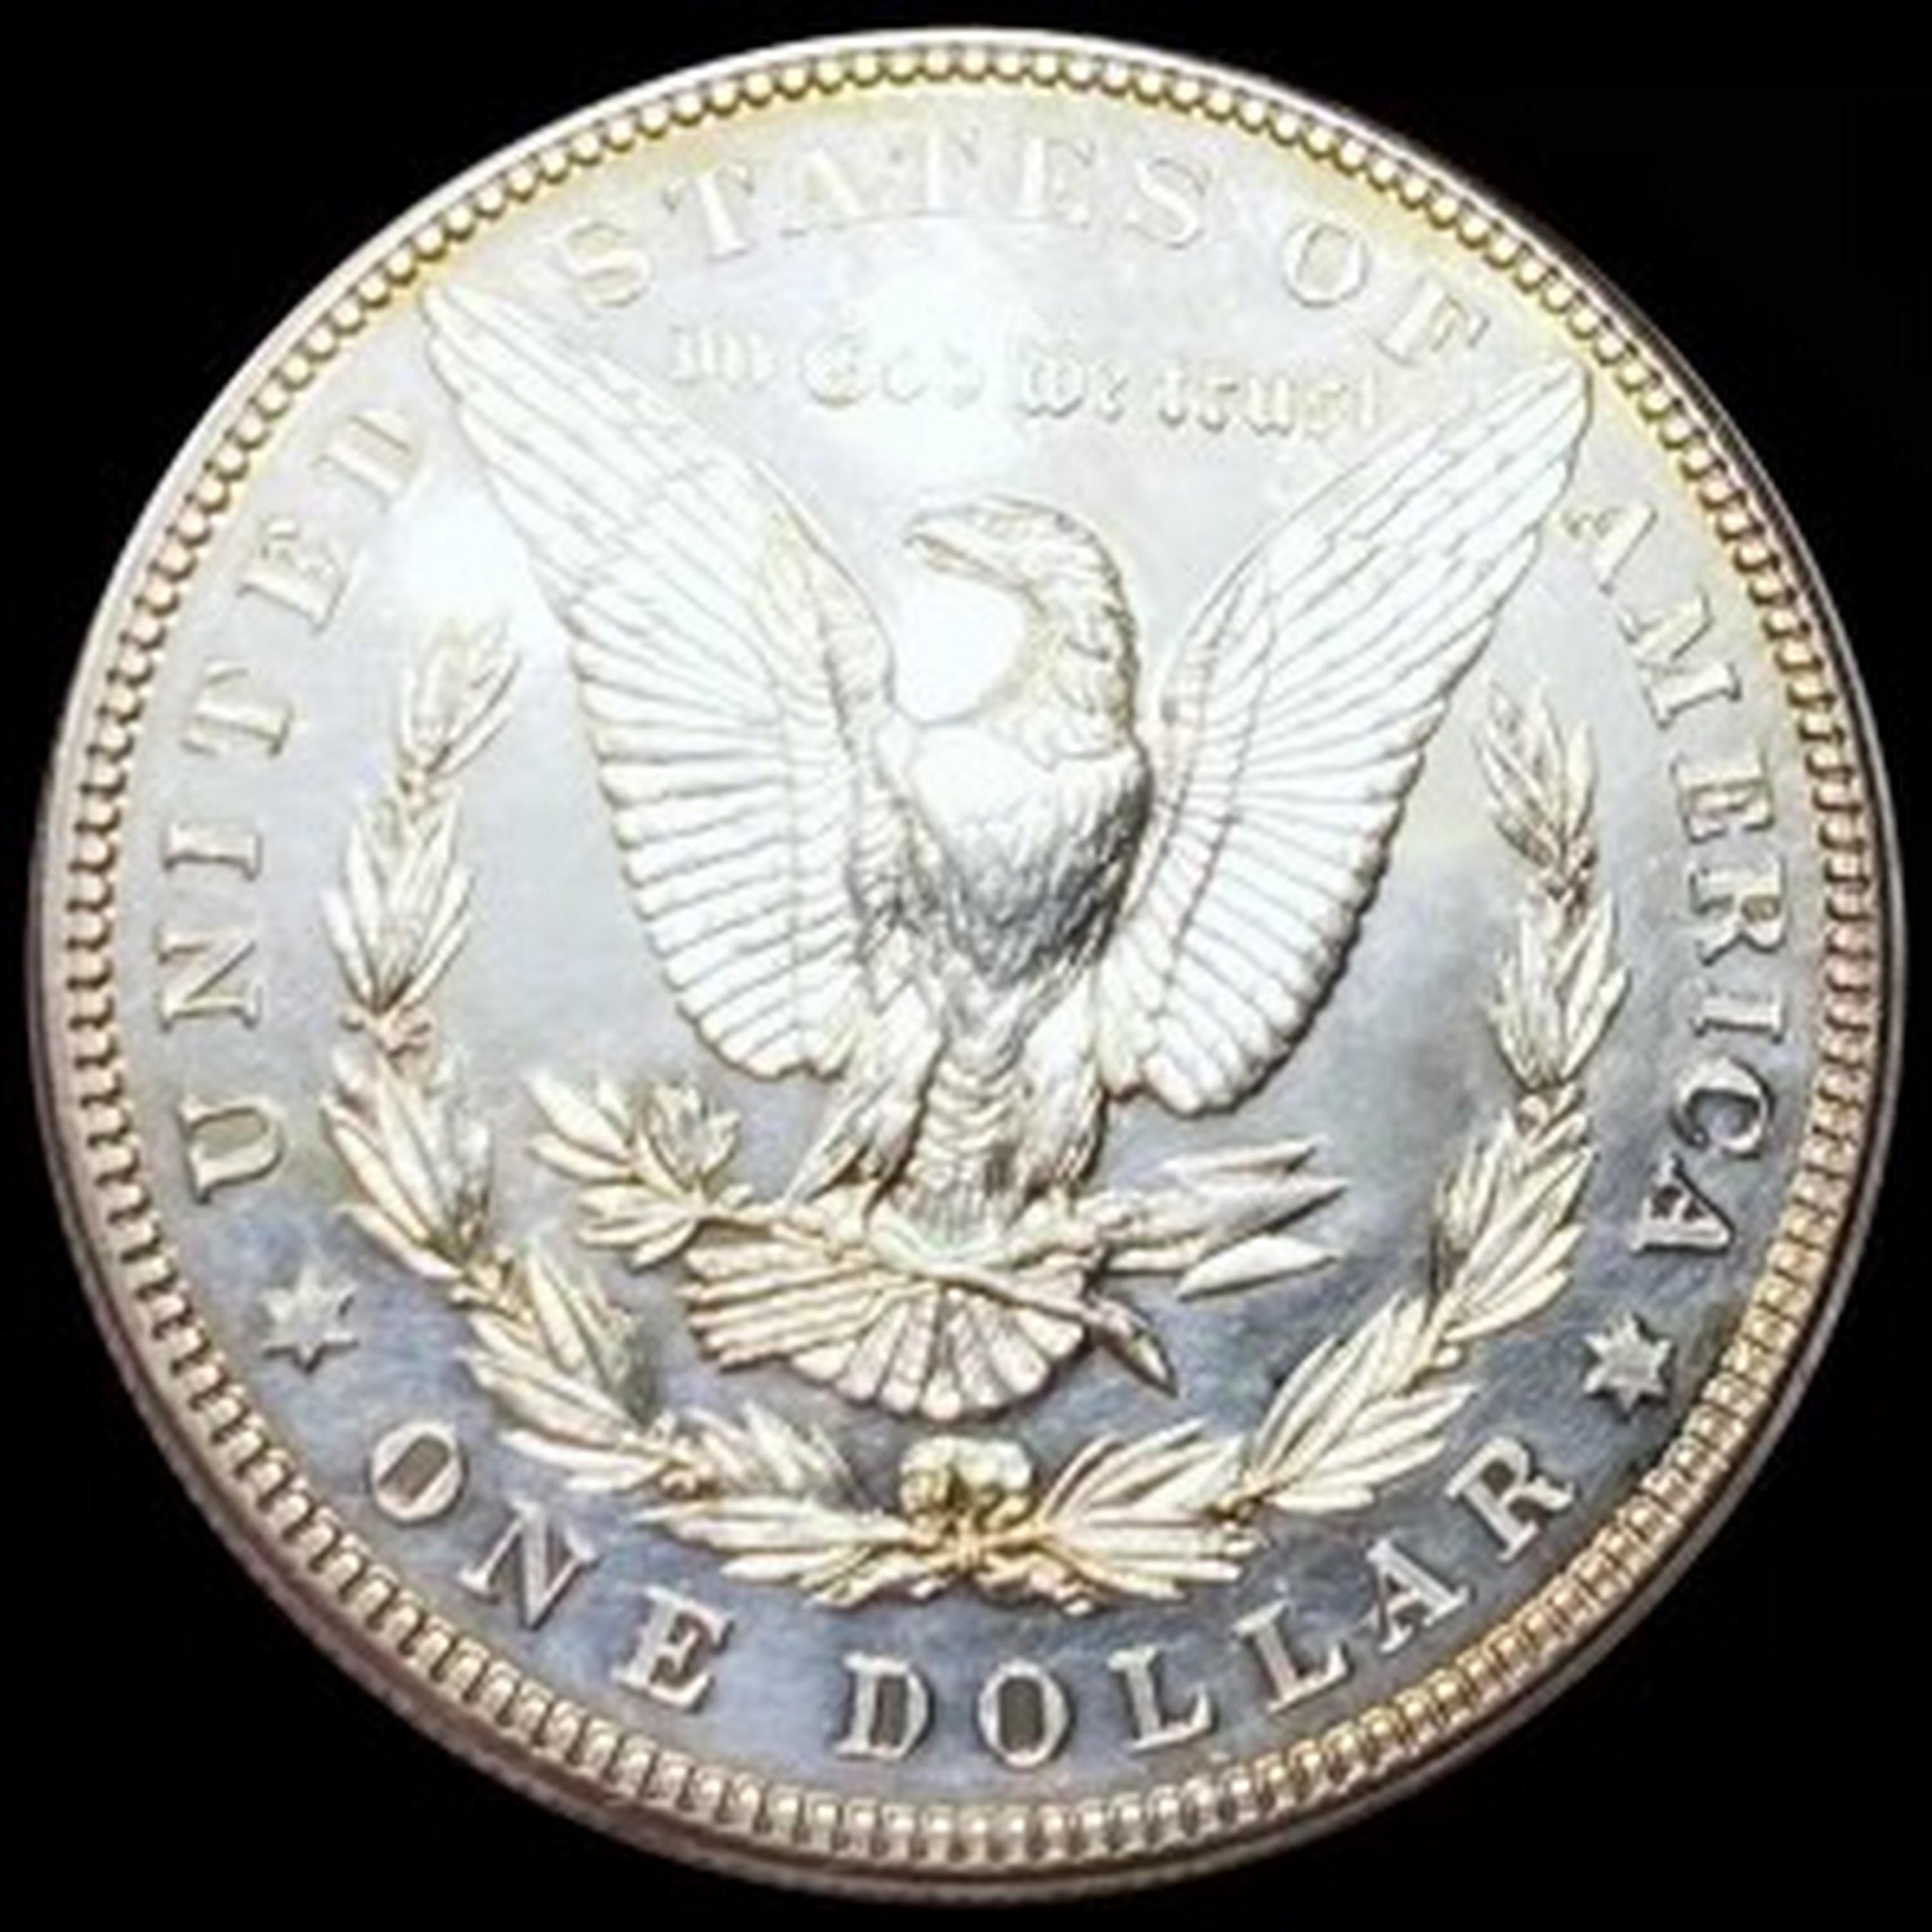 1902 Morgan Silver Dollar CHOICE PROOF